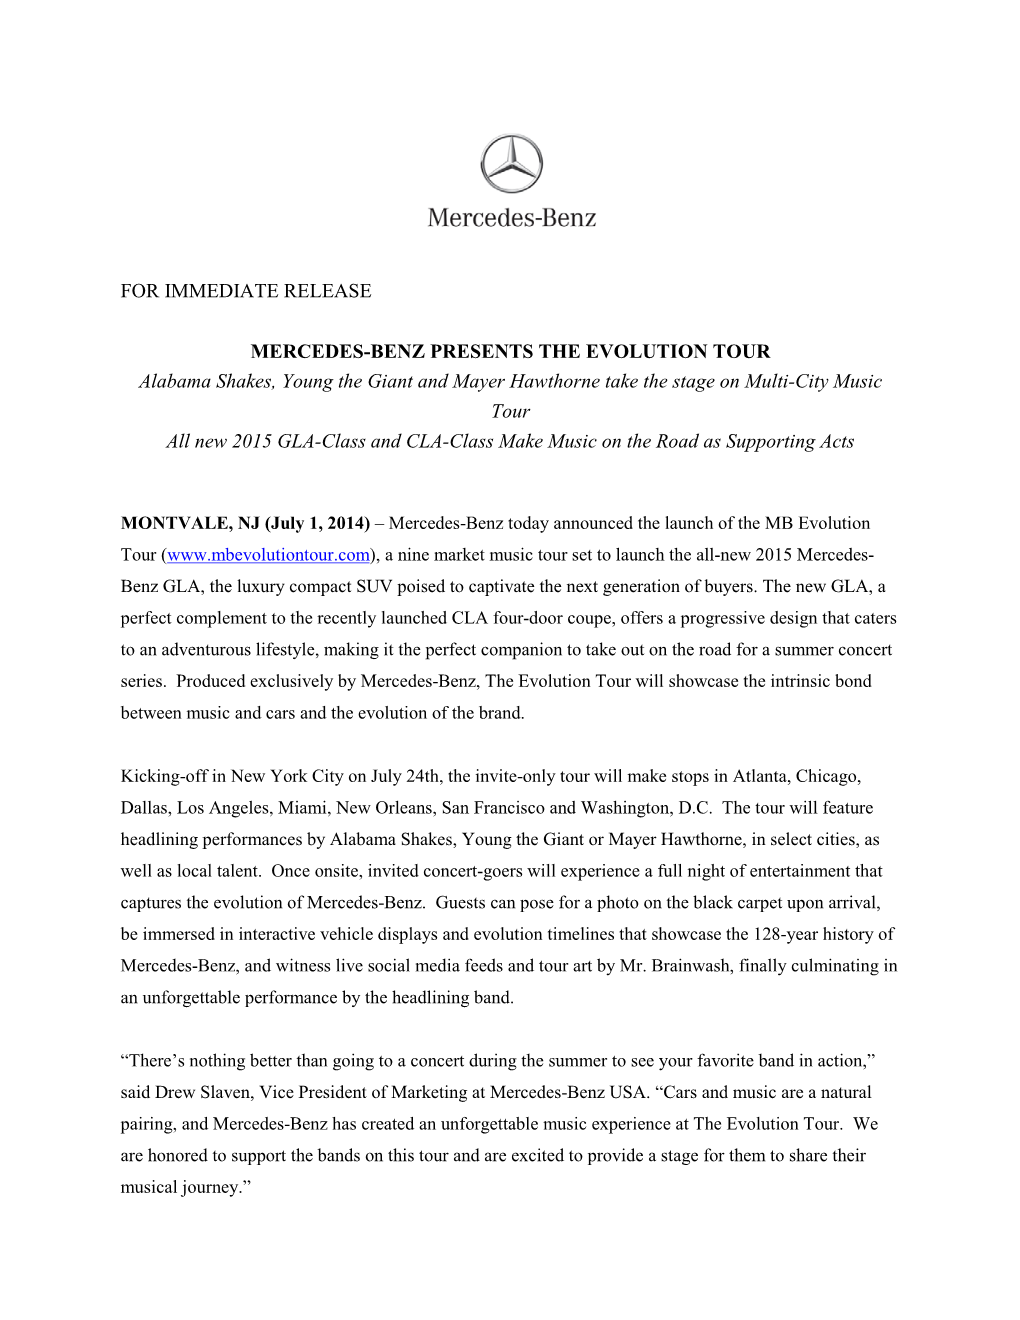 Mercedes-Benz Presents the Evolution Tour